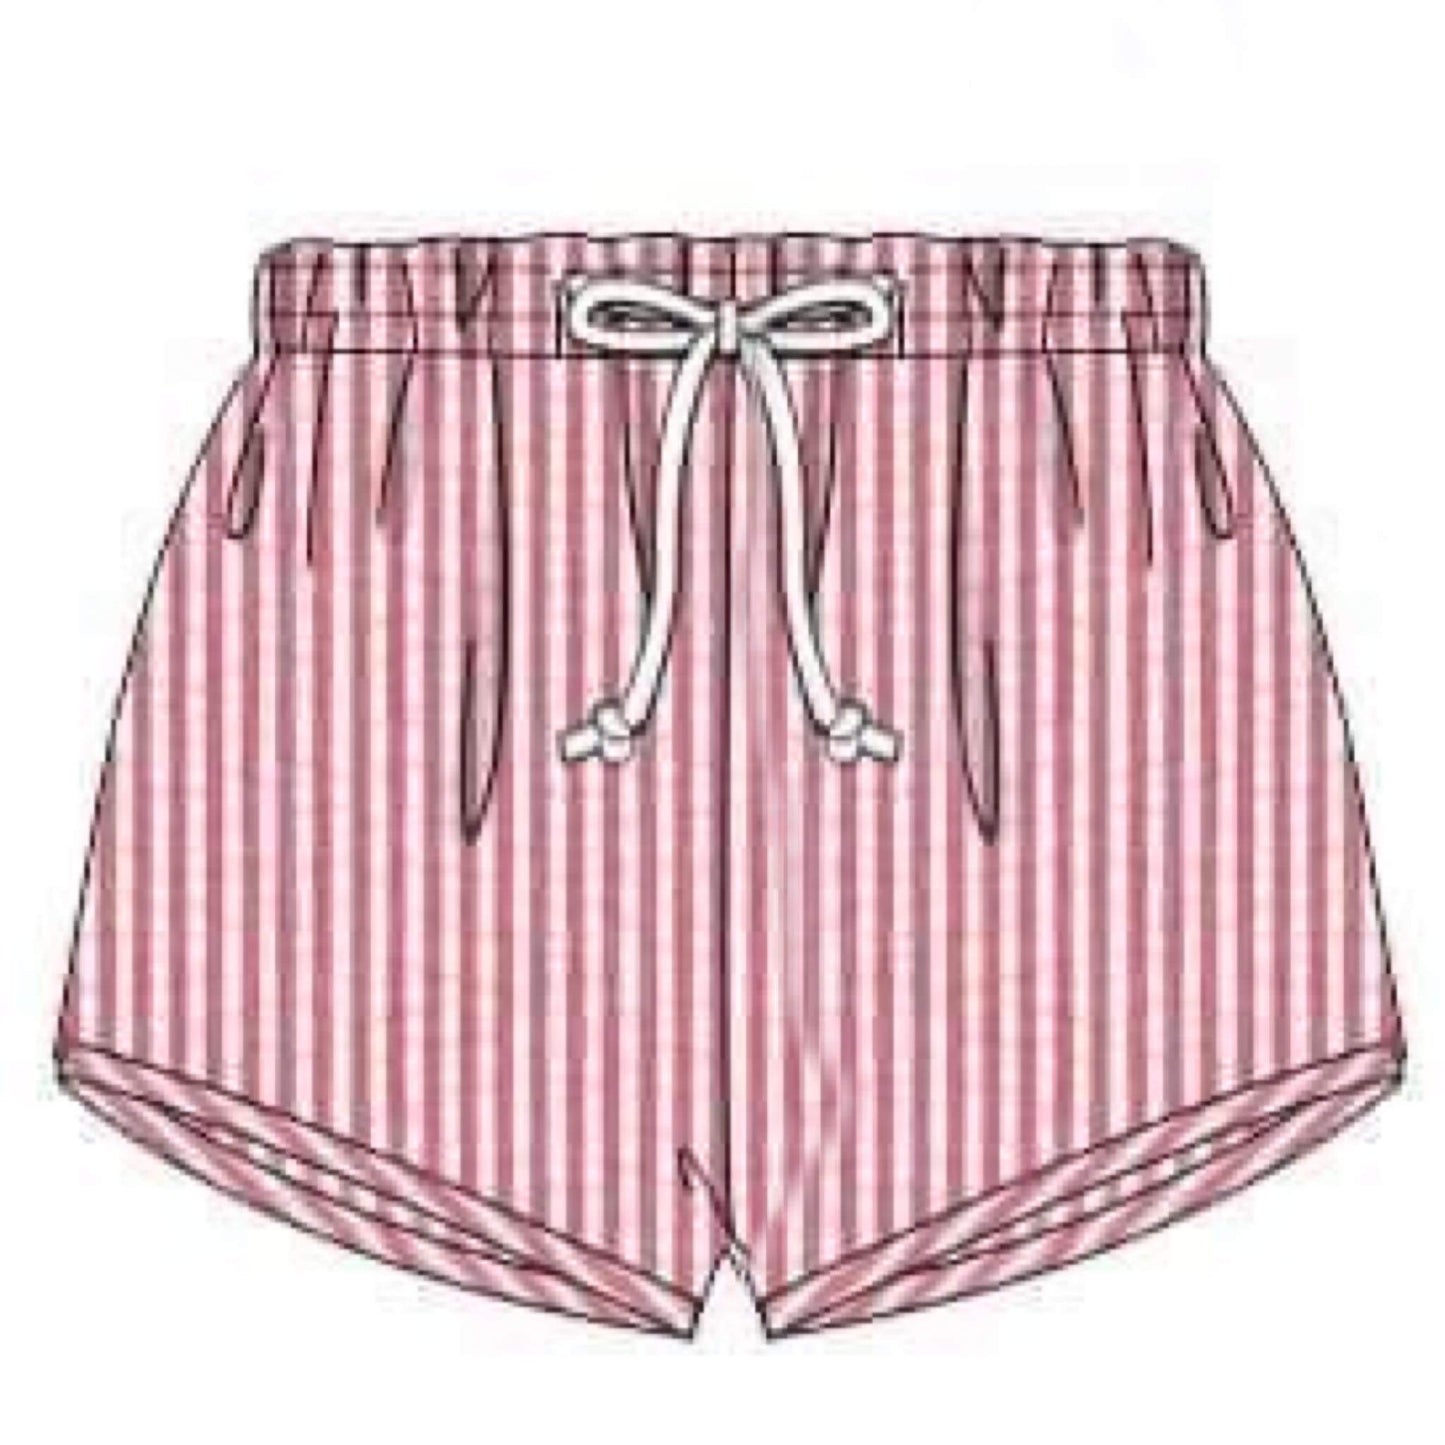 RTS: Wavy Flag Applique Collection- Boys Seersucker Super Shortie Shorts